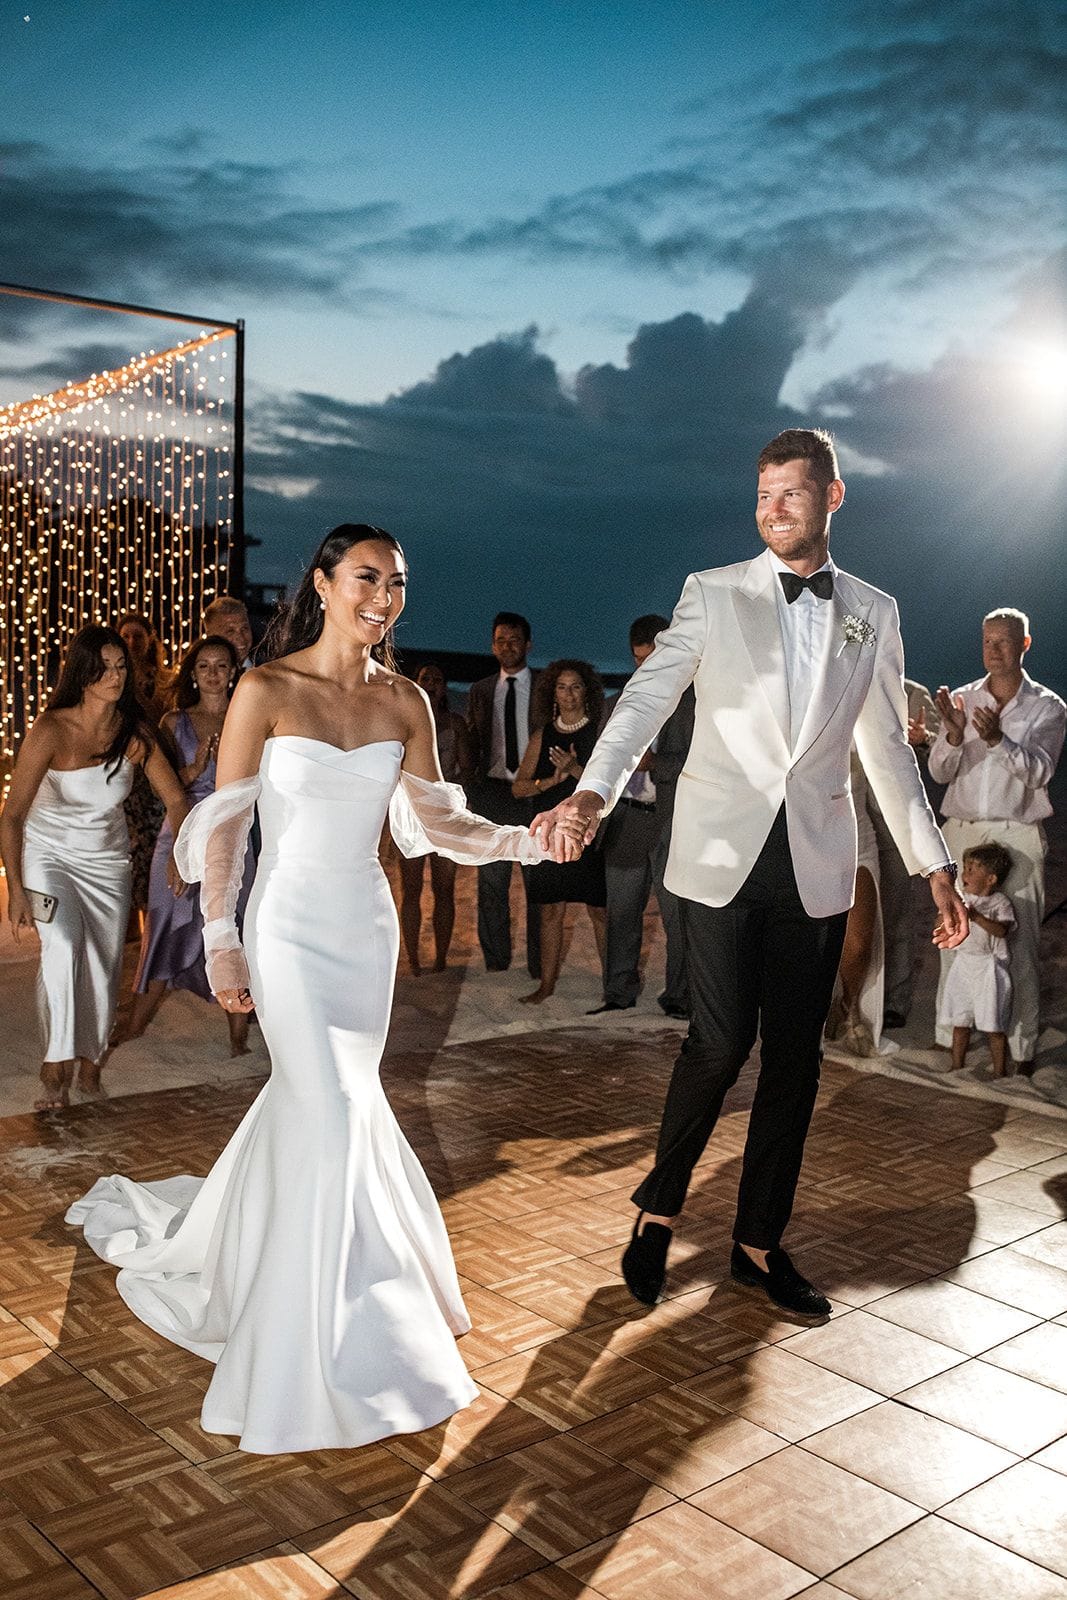 Bride and groom on beach dance floor at wedding reception in Anguilla